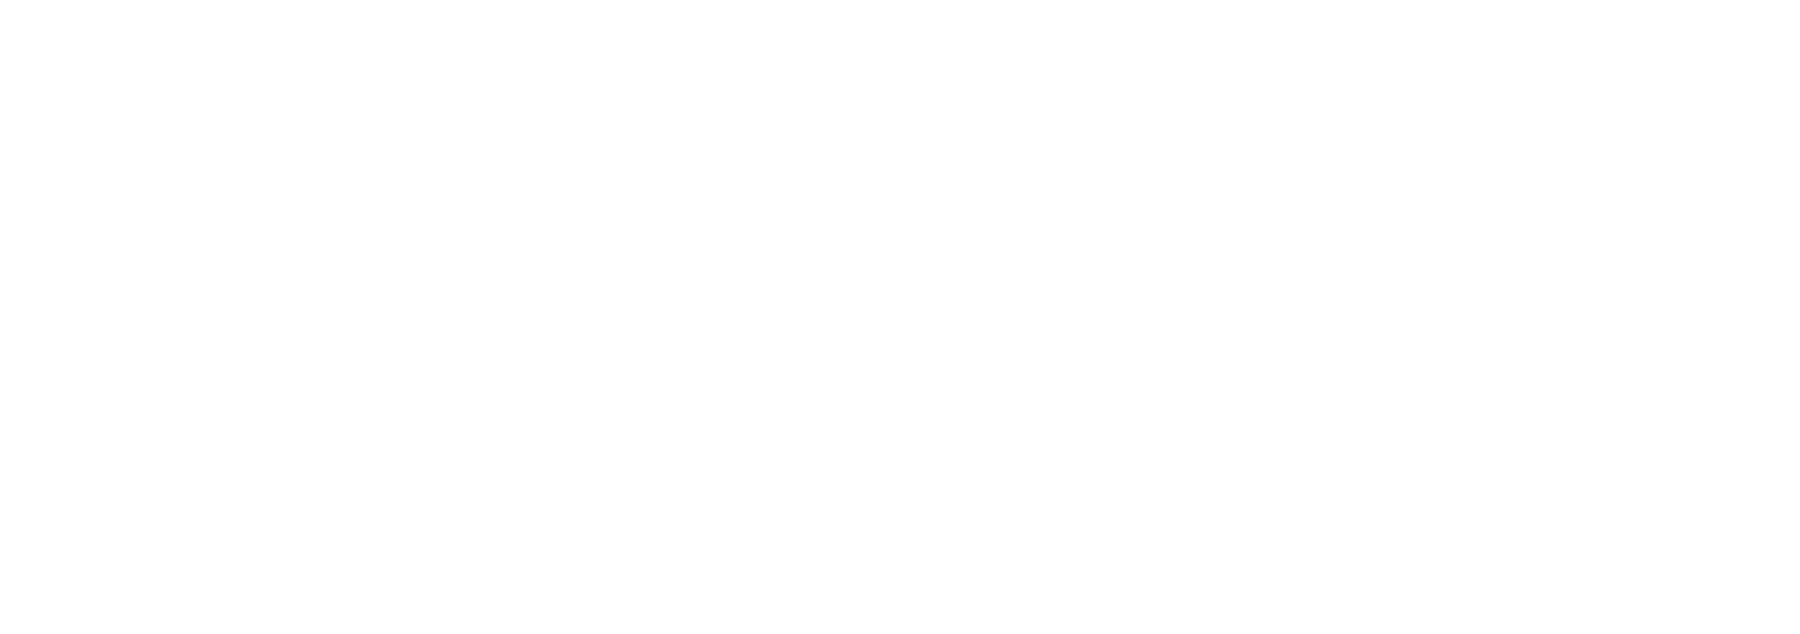 scandinavian-christmas-stories-6